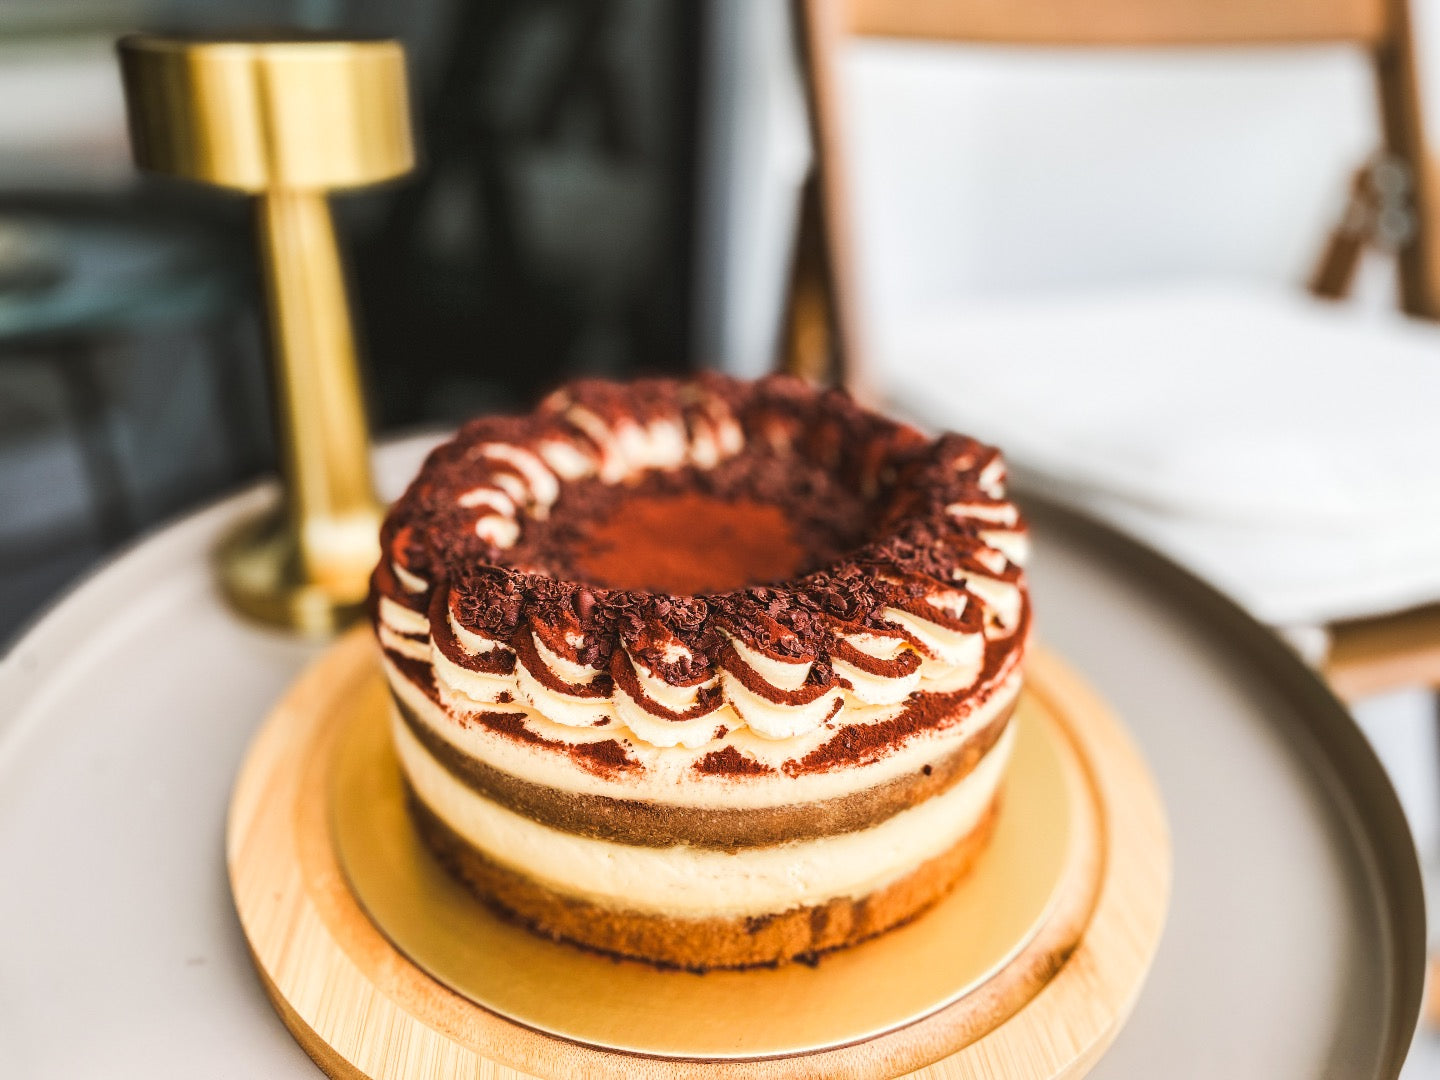 The Taz-Ra-Misu is a luscious tiramisu cake that reimagines tradition with a spirited twist of rum and coffee liqueur.